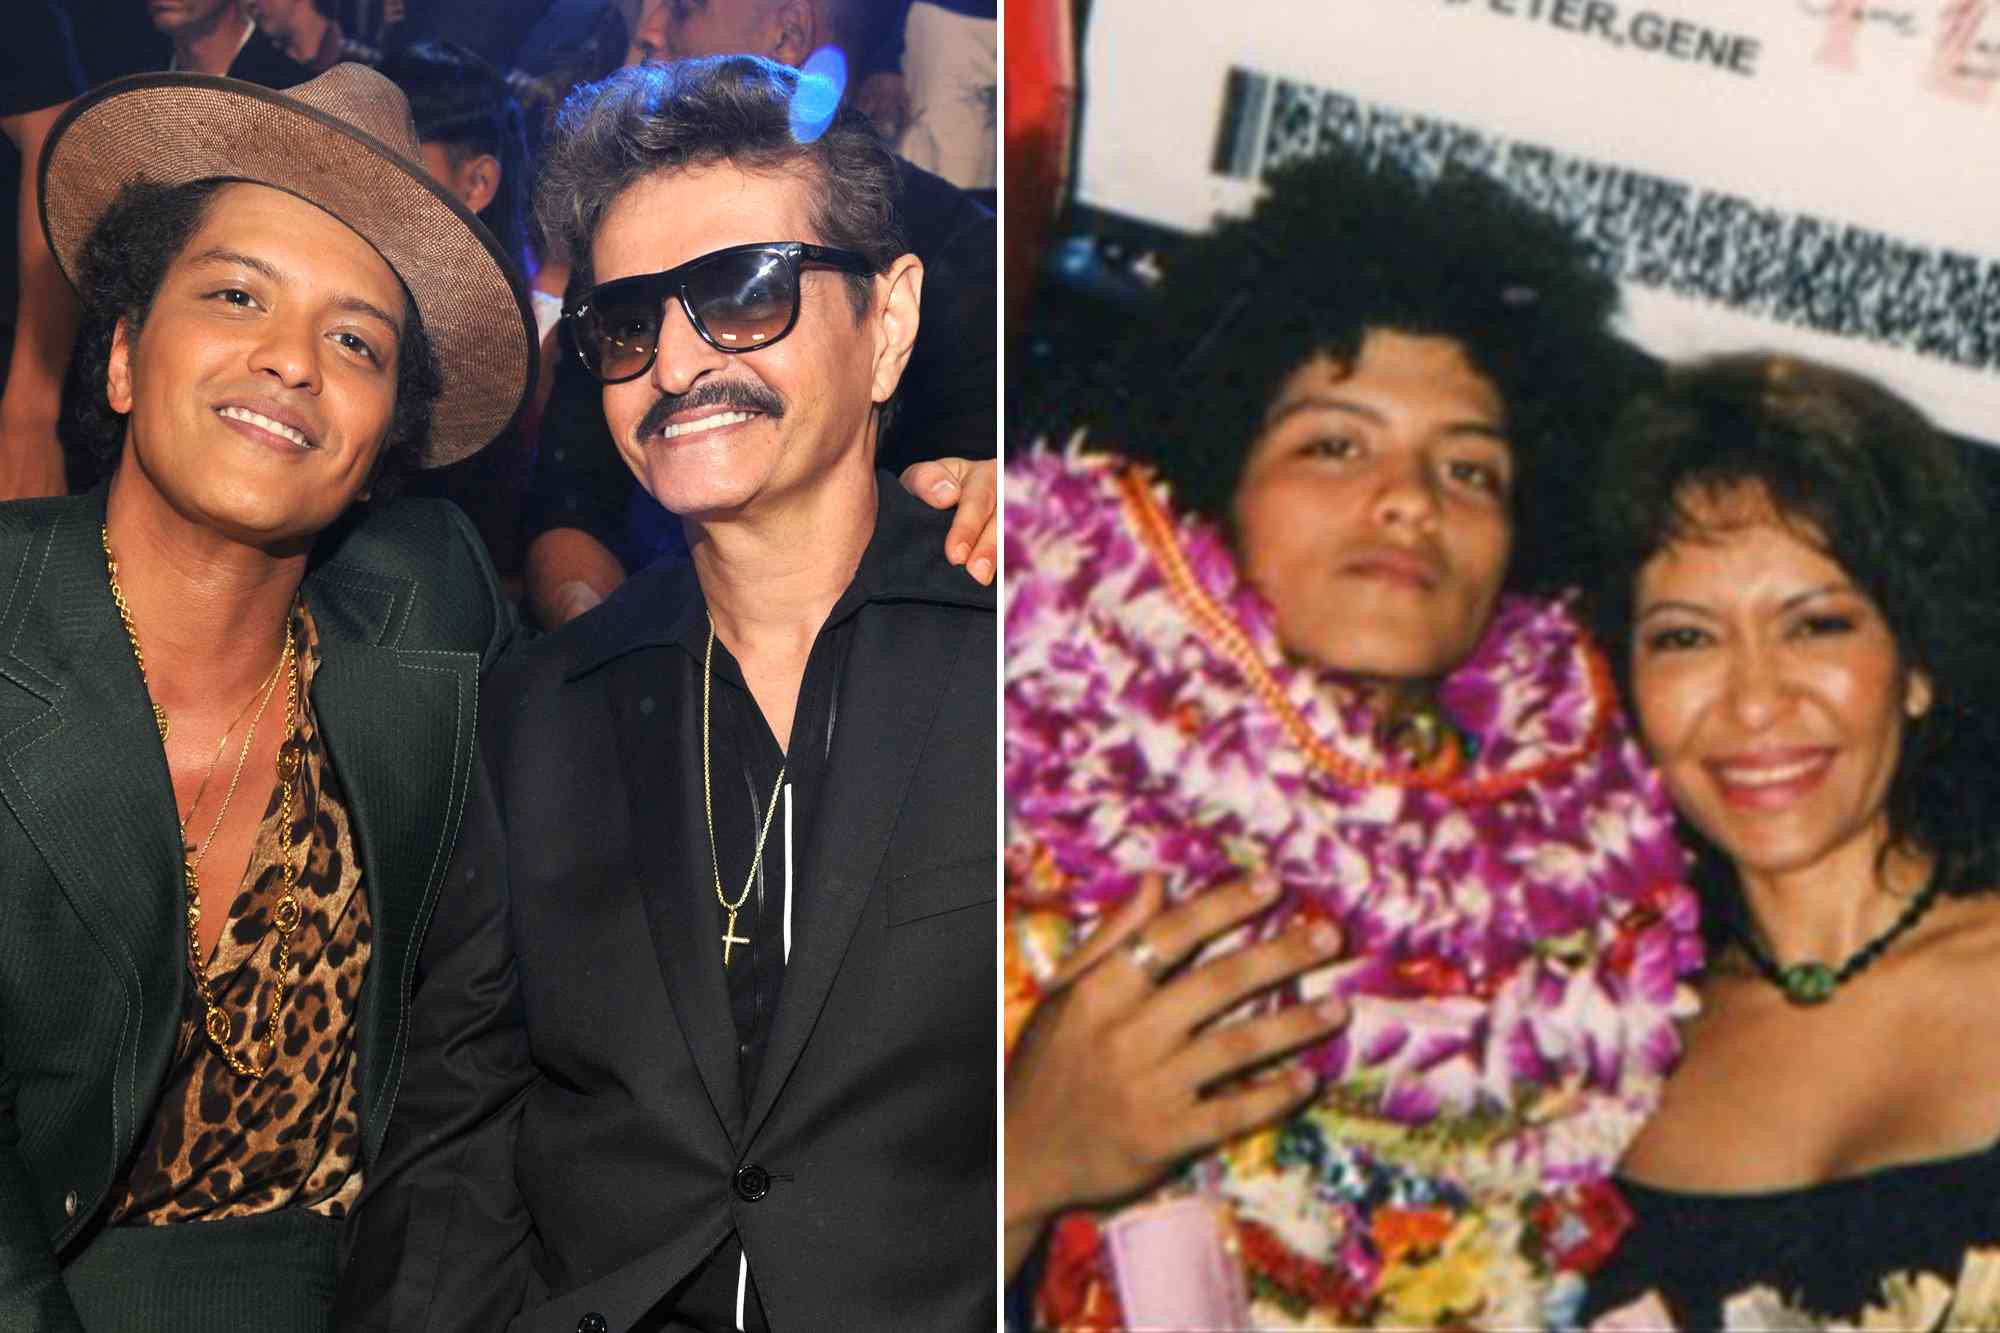 All About Bruno Mars' Parents, Bernadette and Peter Hernandez